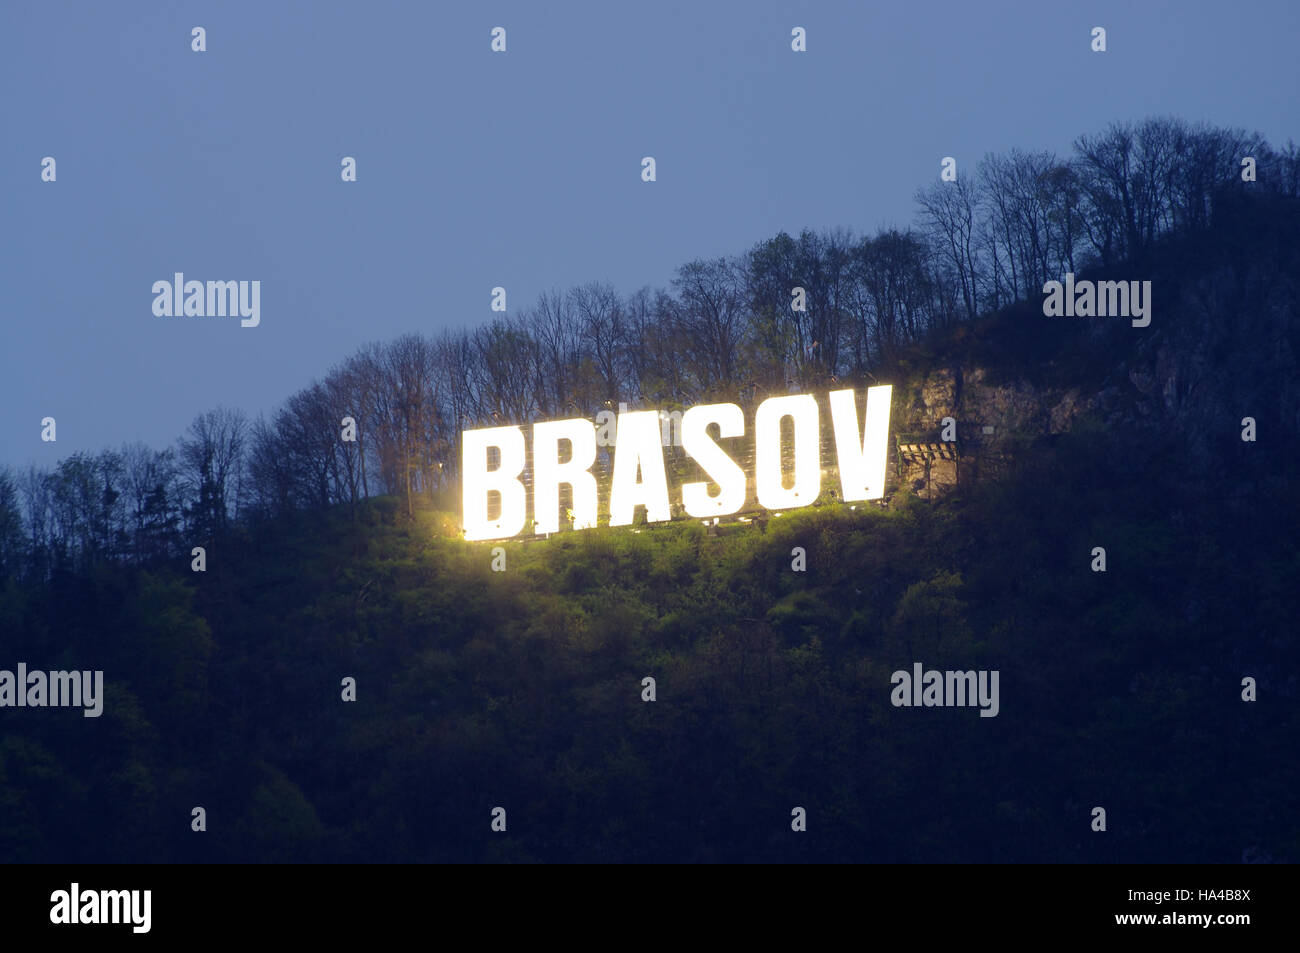 Brasov city word illuminated Stock Photo